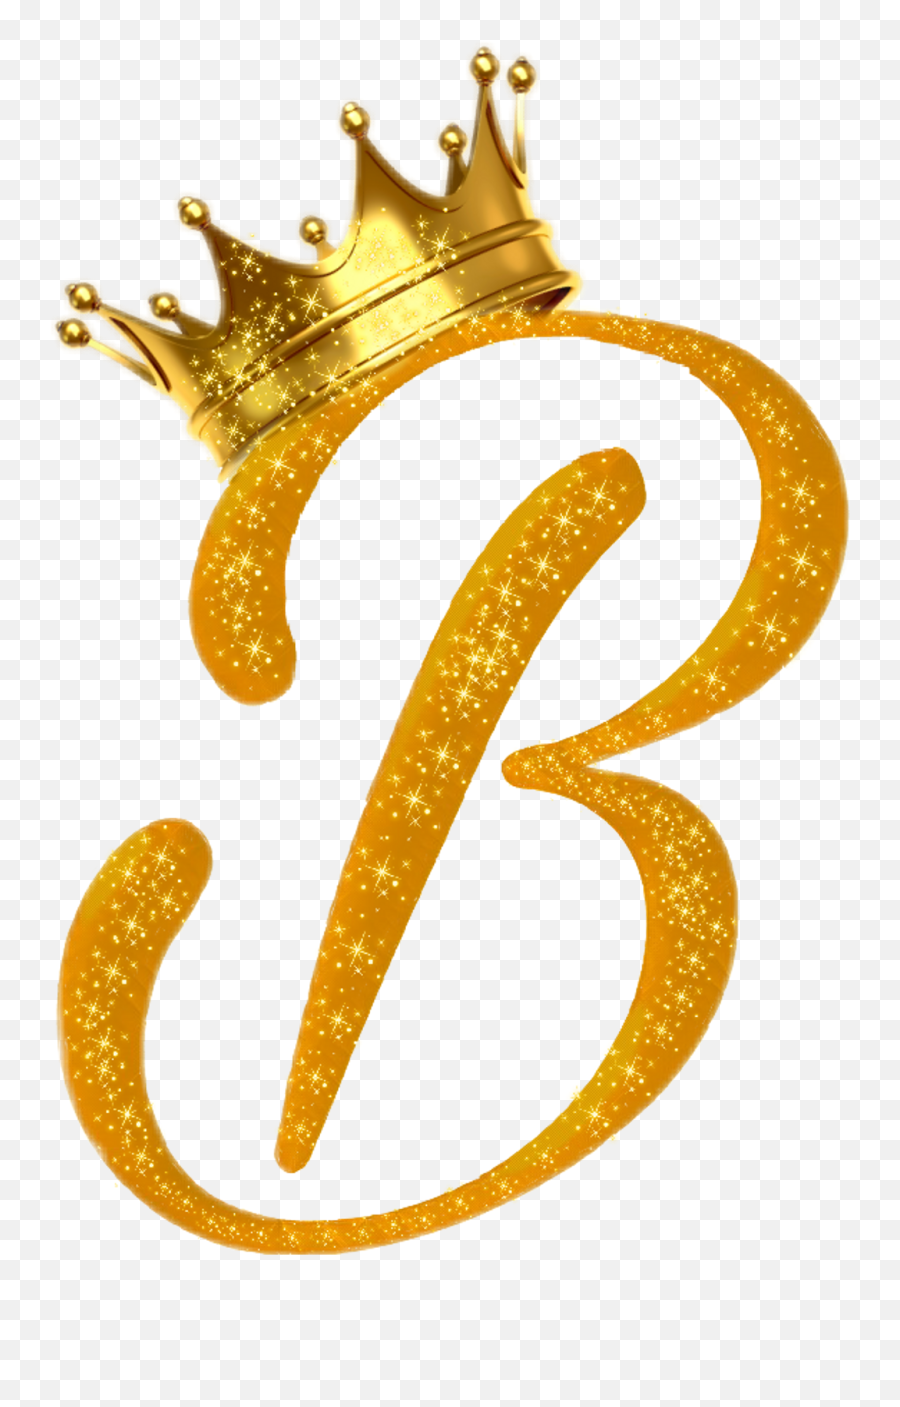 Download Letters Letter B Gold Crown Royal Clip Library - Gold Letter B With Crown Png,Gold Crown Transparent Background